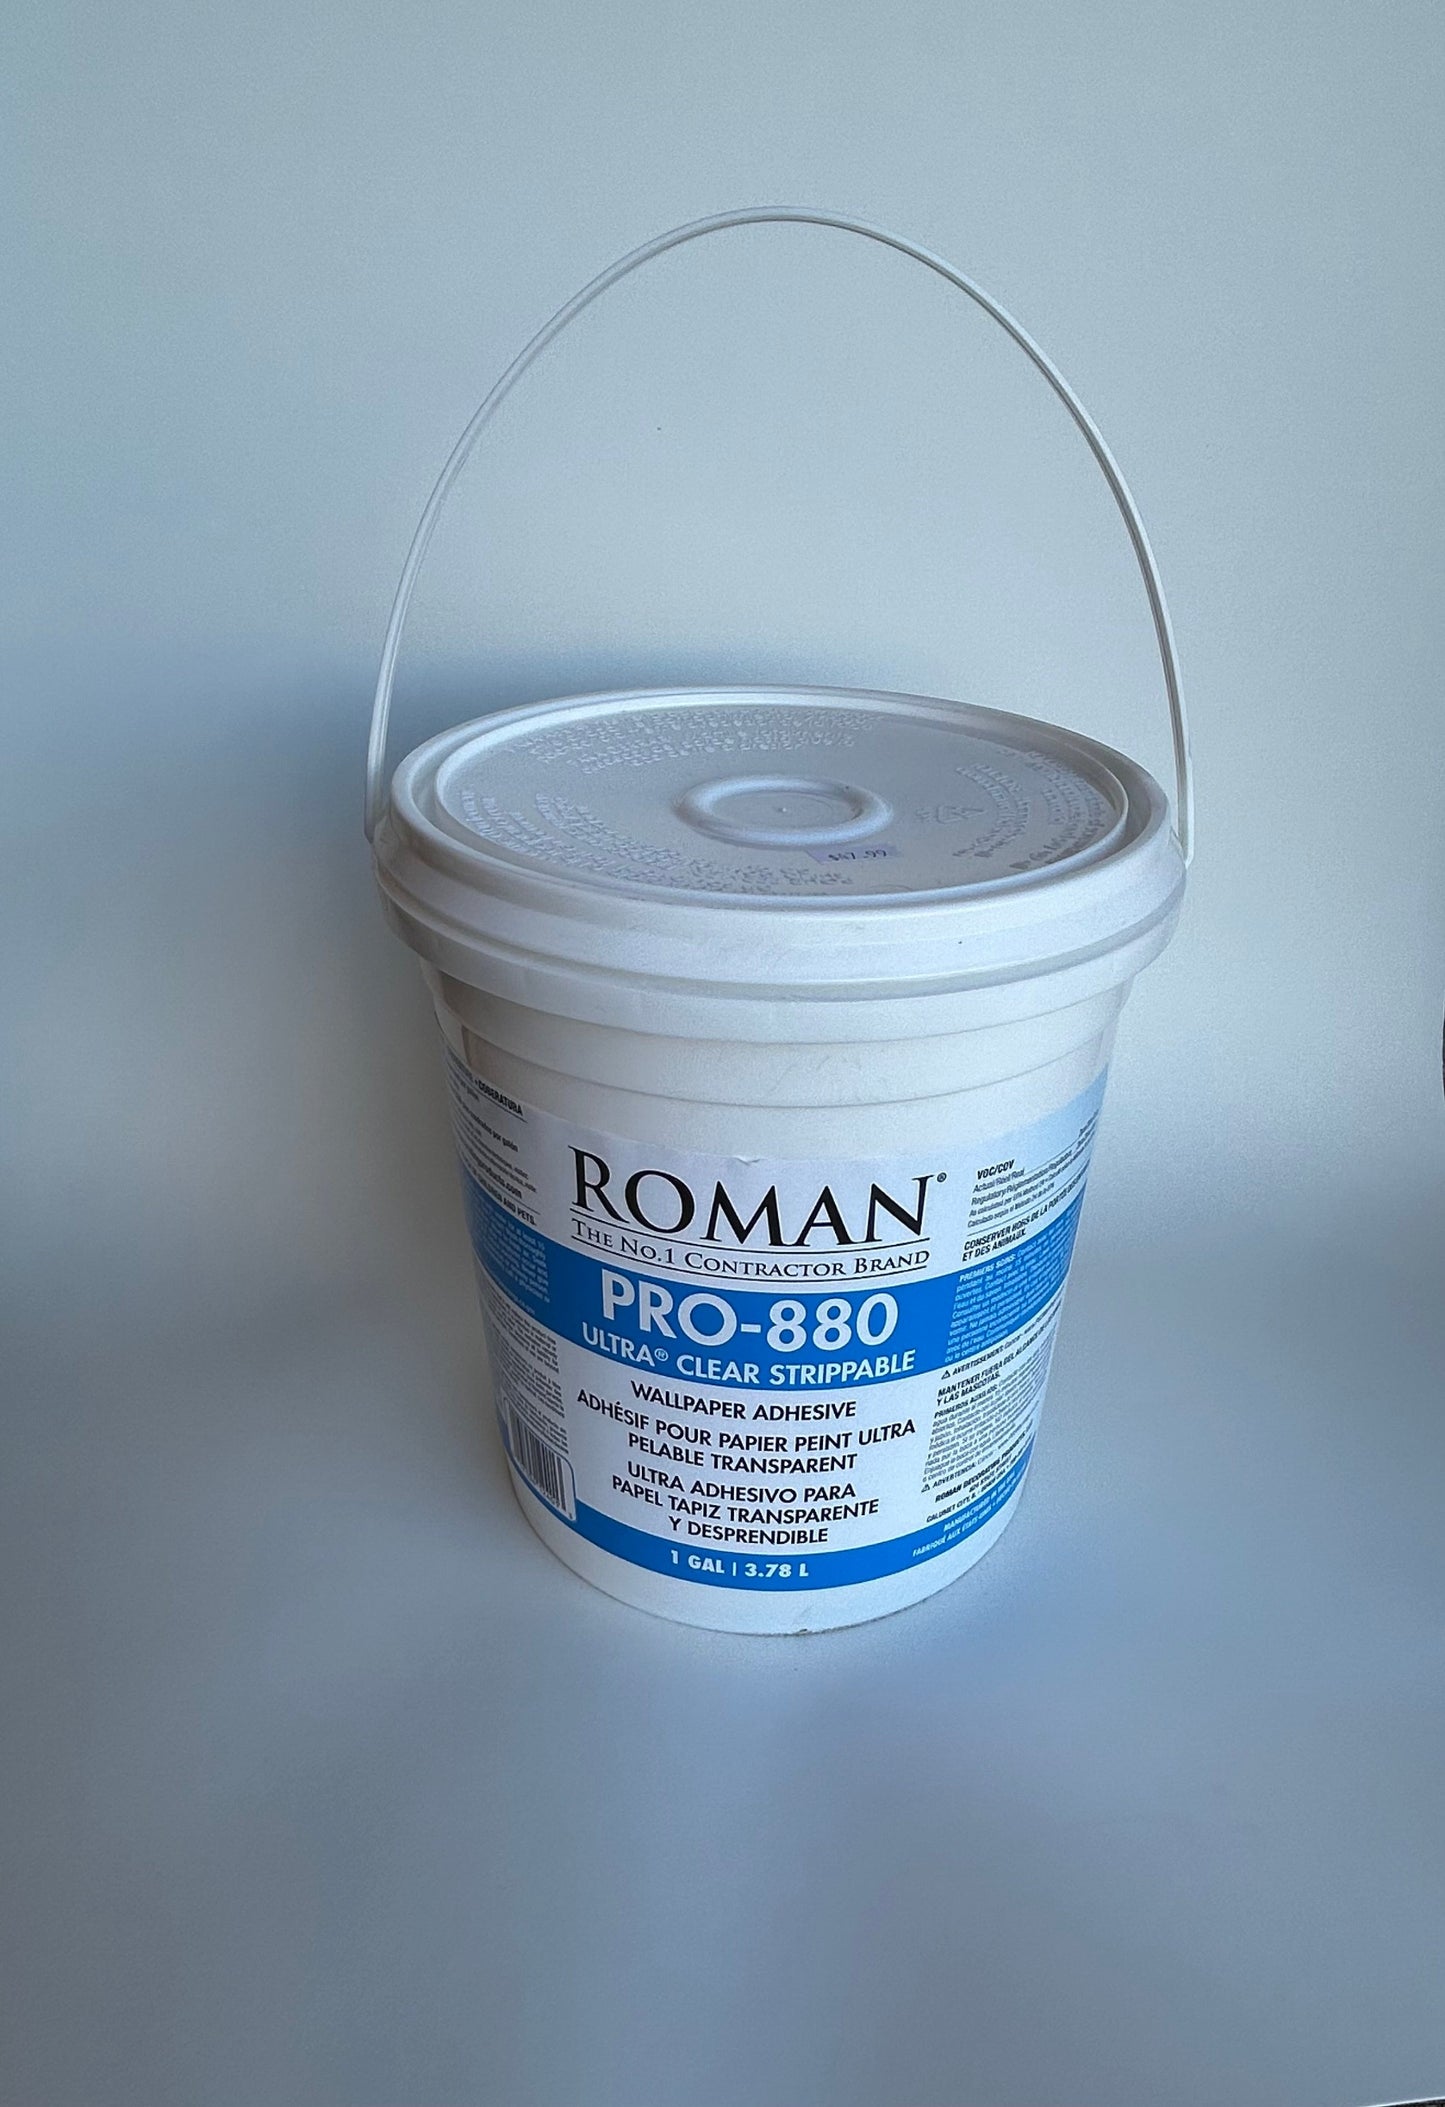 Roman Pro-880 Ultra Clear Wallpaper adhesive